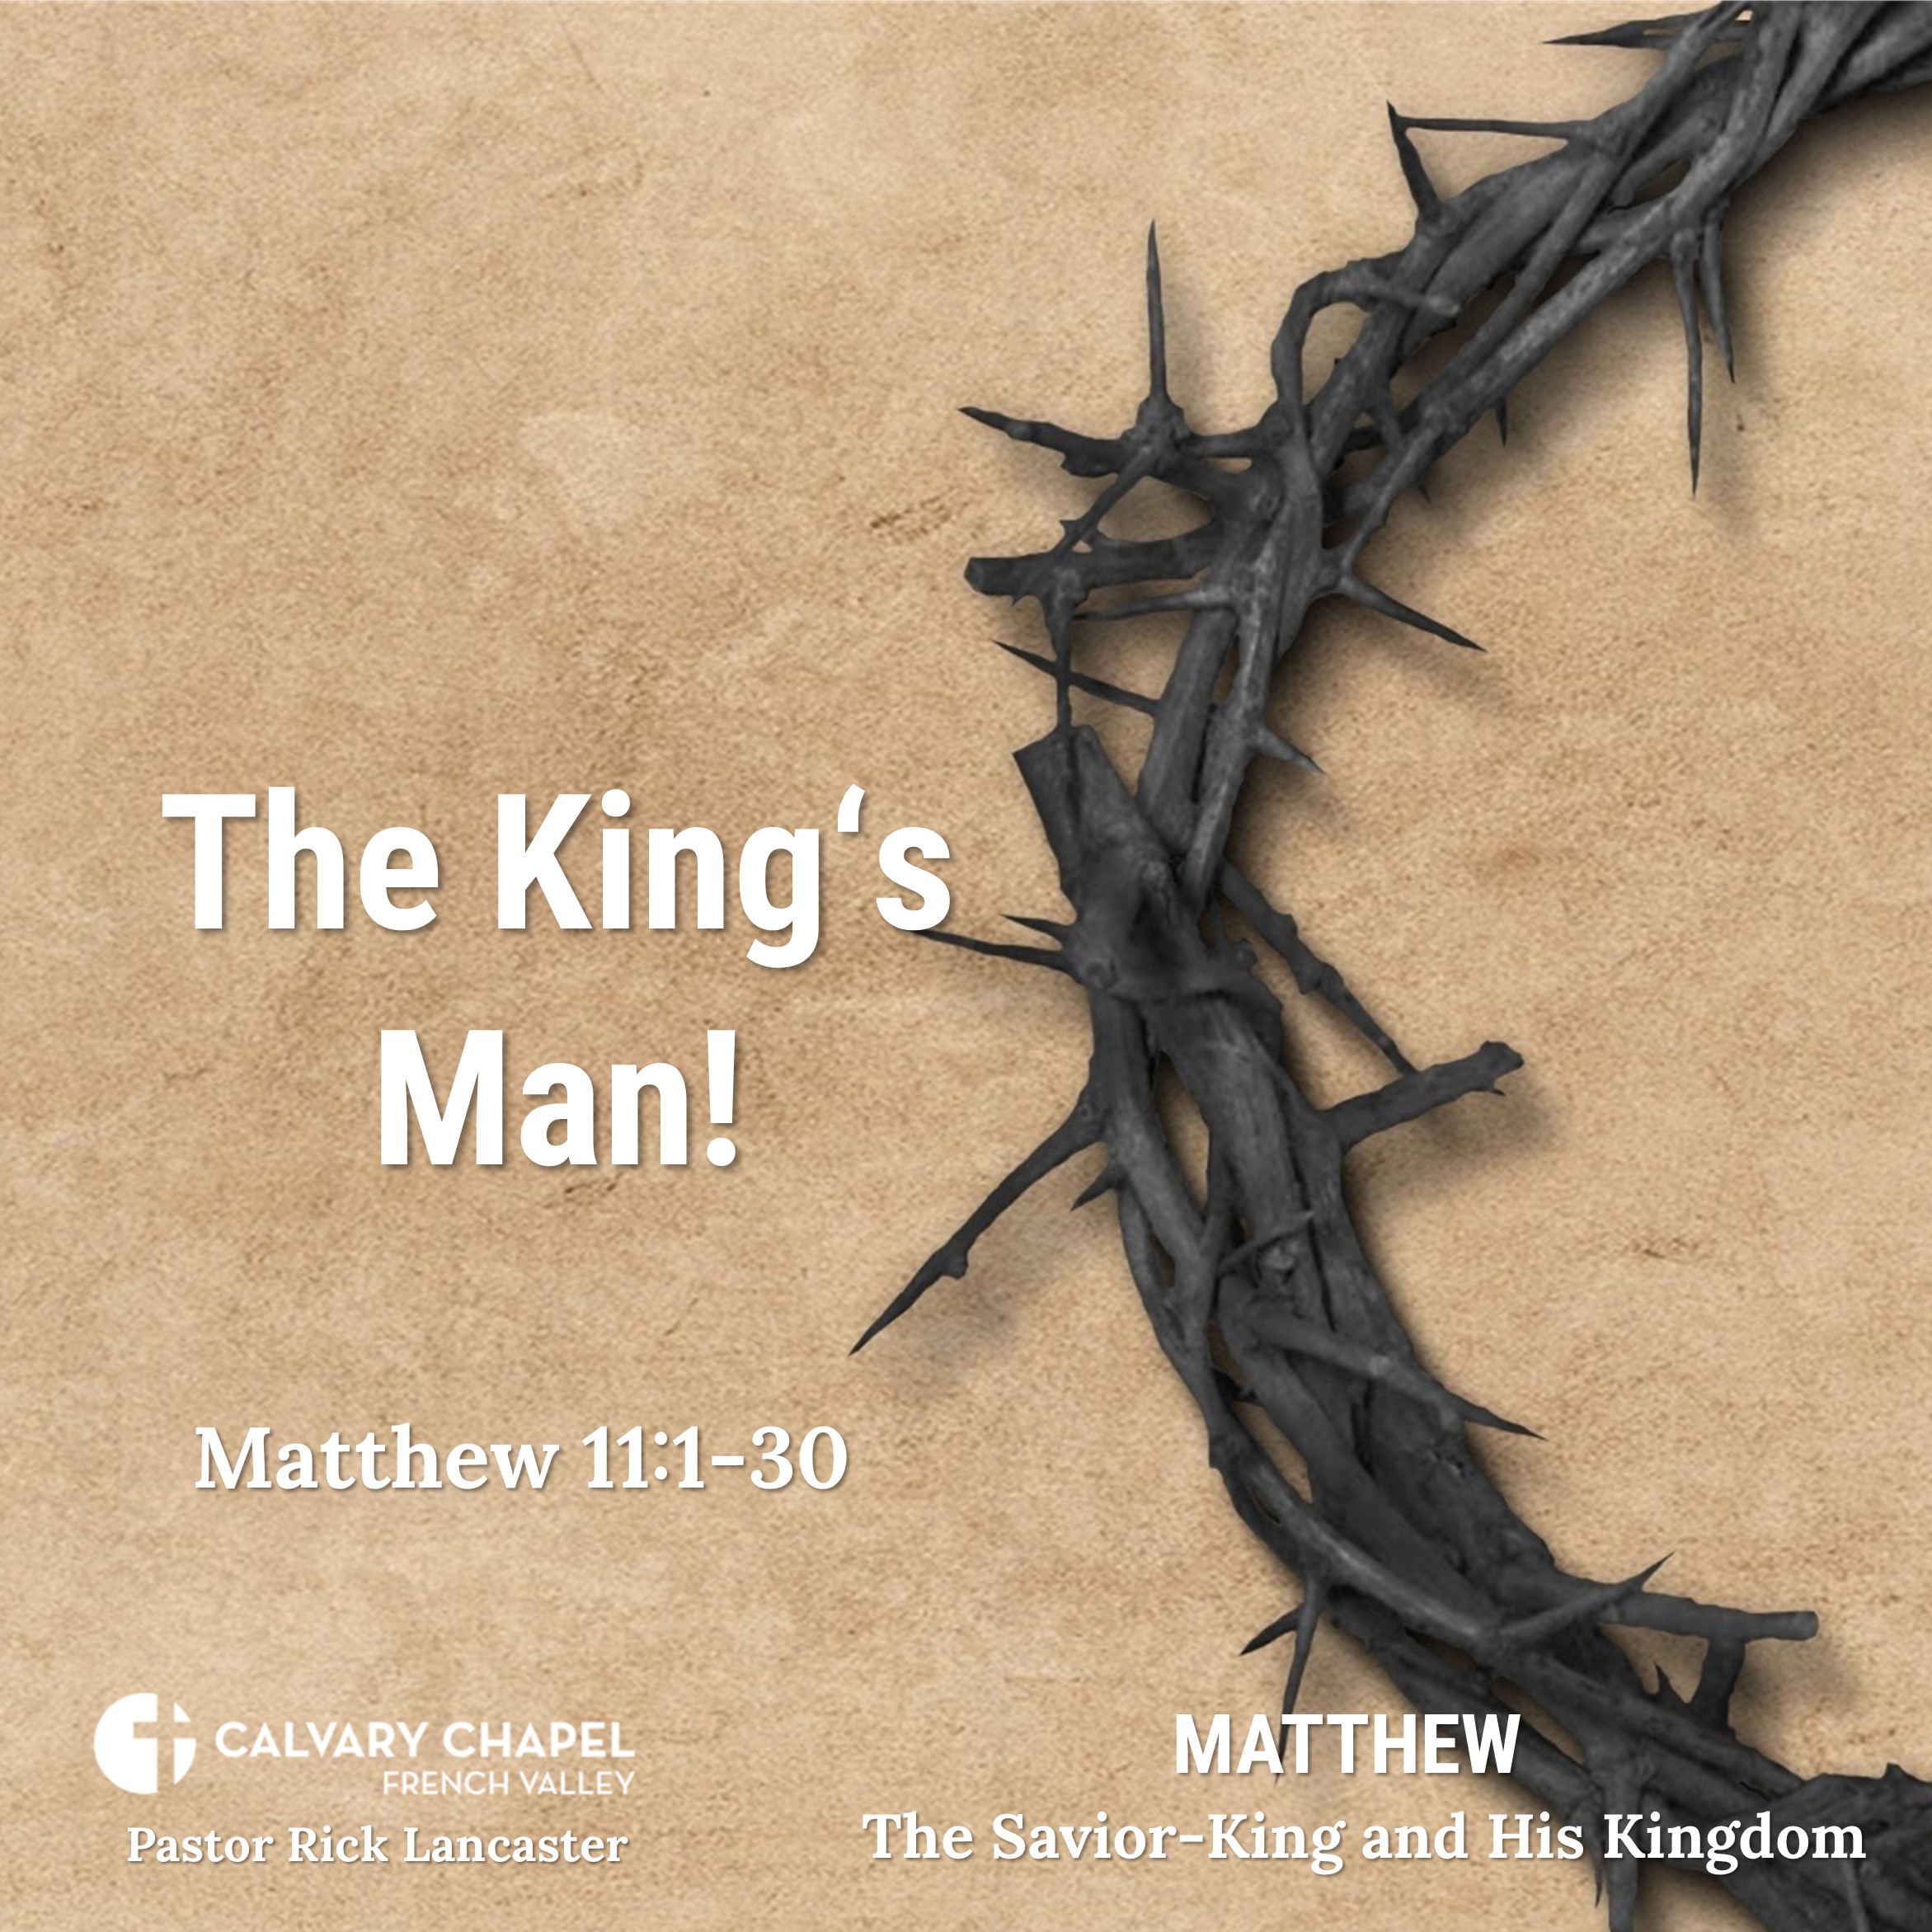 The King’s Man! – Matthew 11:1-30 - Matthew: The Savior-King and His Kingdom